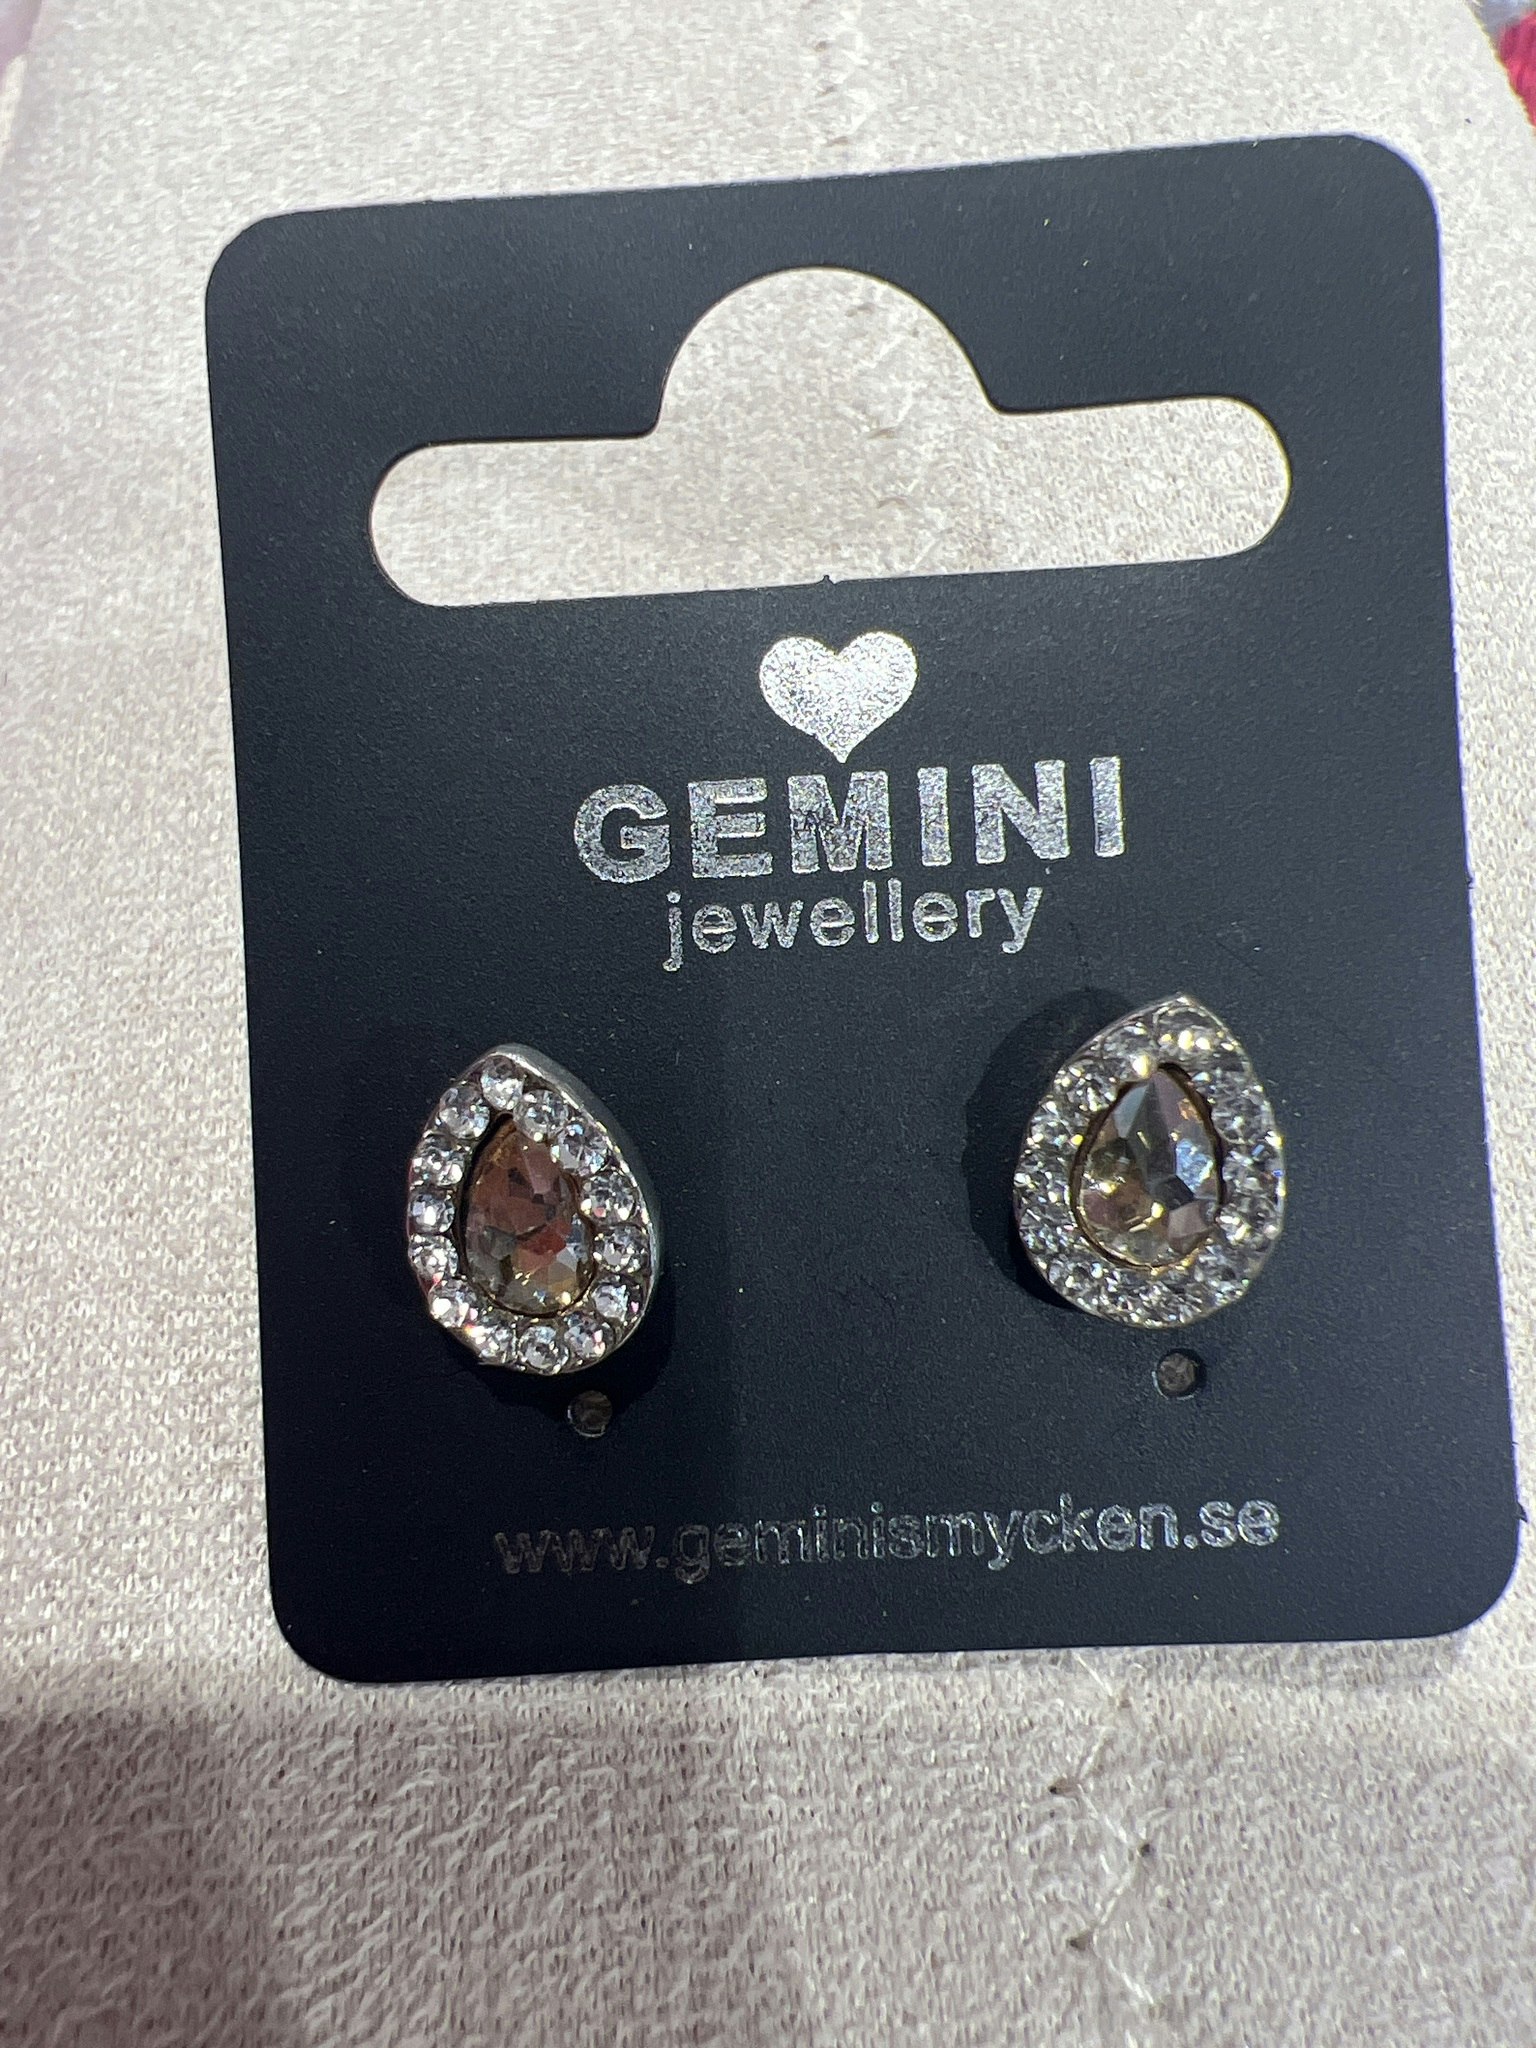 Örhängen Gemini Droppe diamant Gul